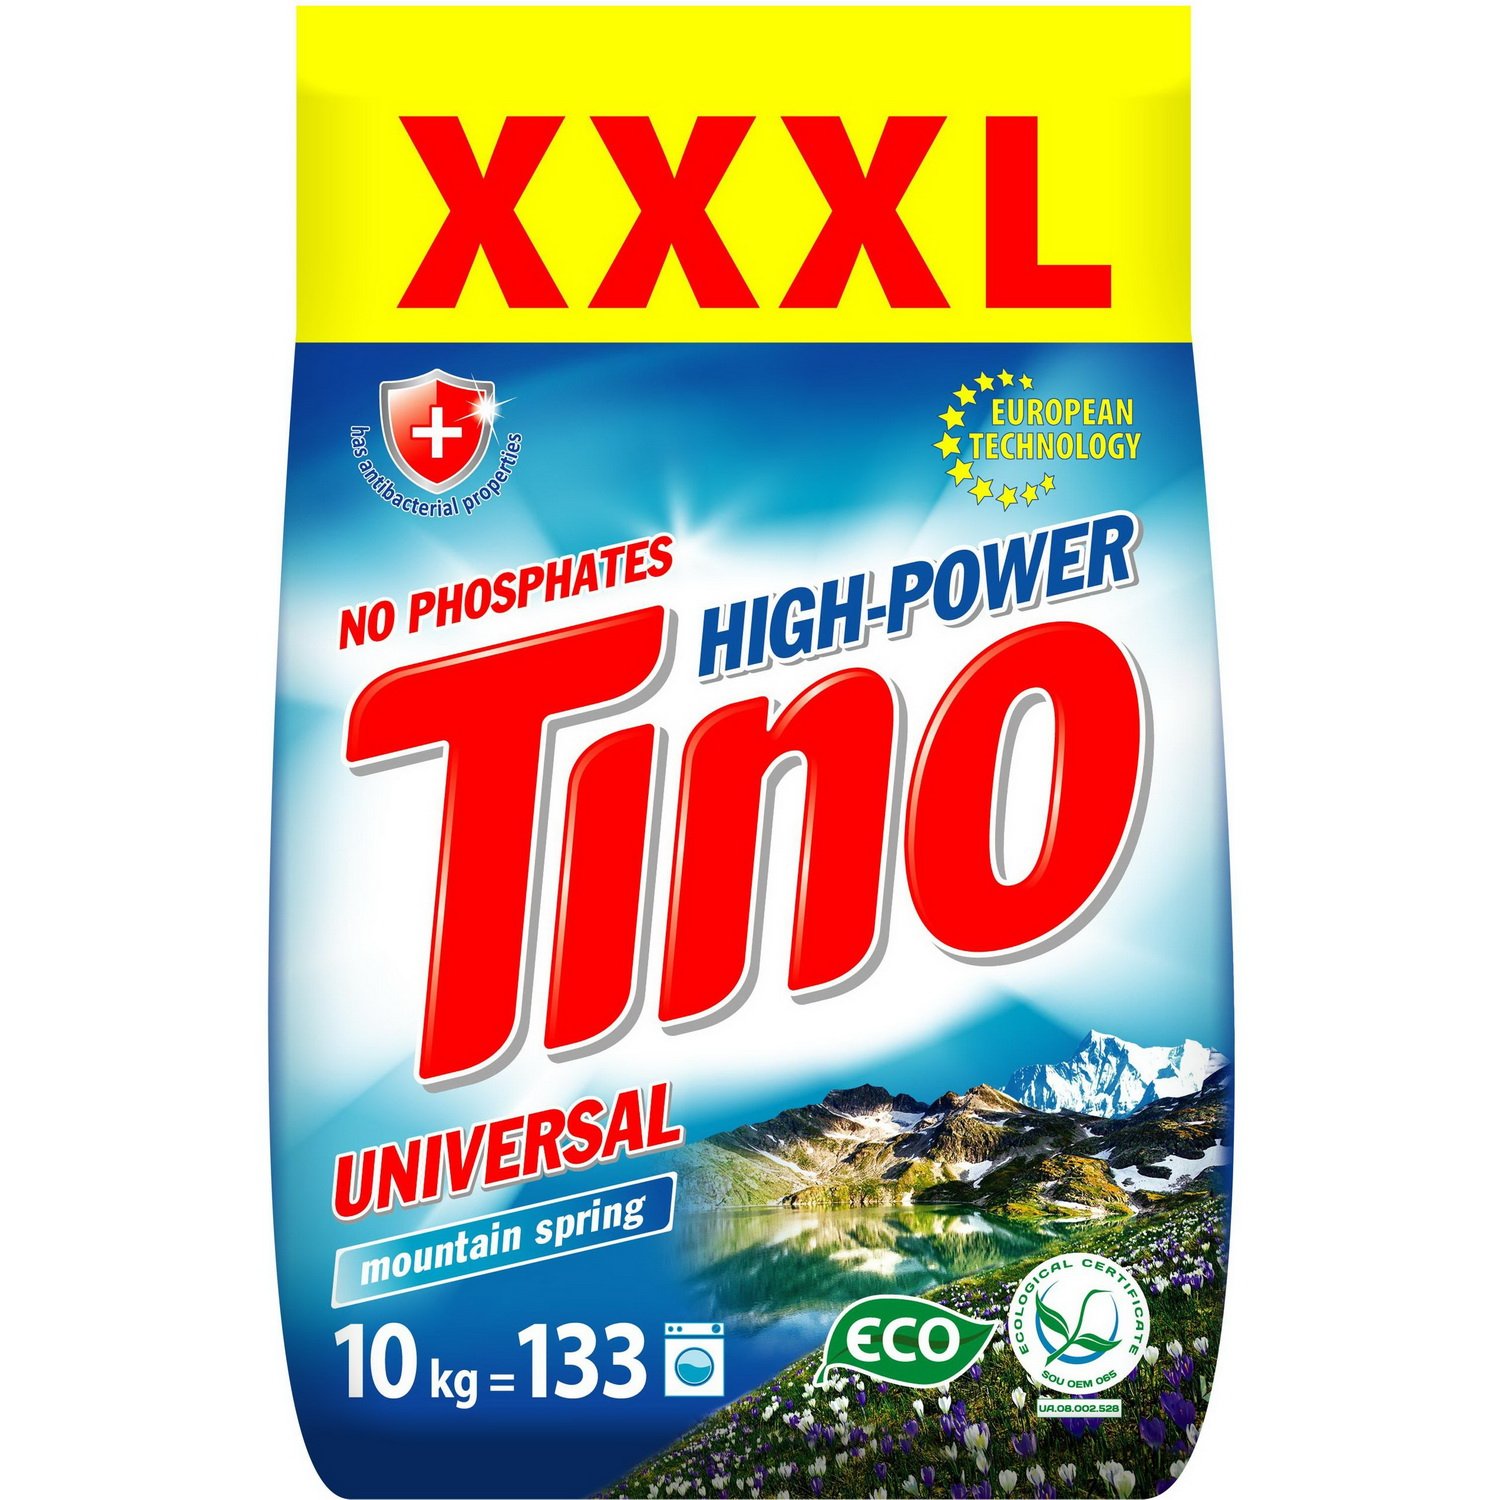 Порошок пральний Tino High-Power Universal Mountain spring, 10 кг - фото 1